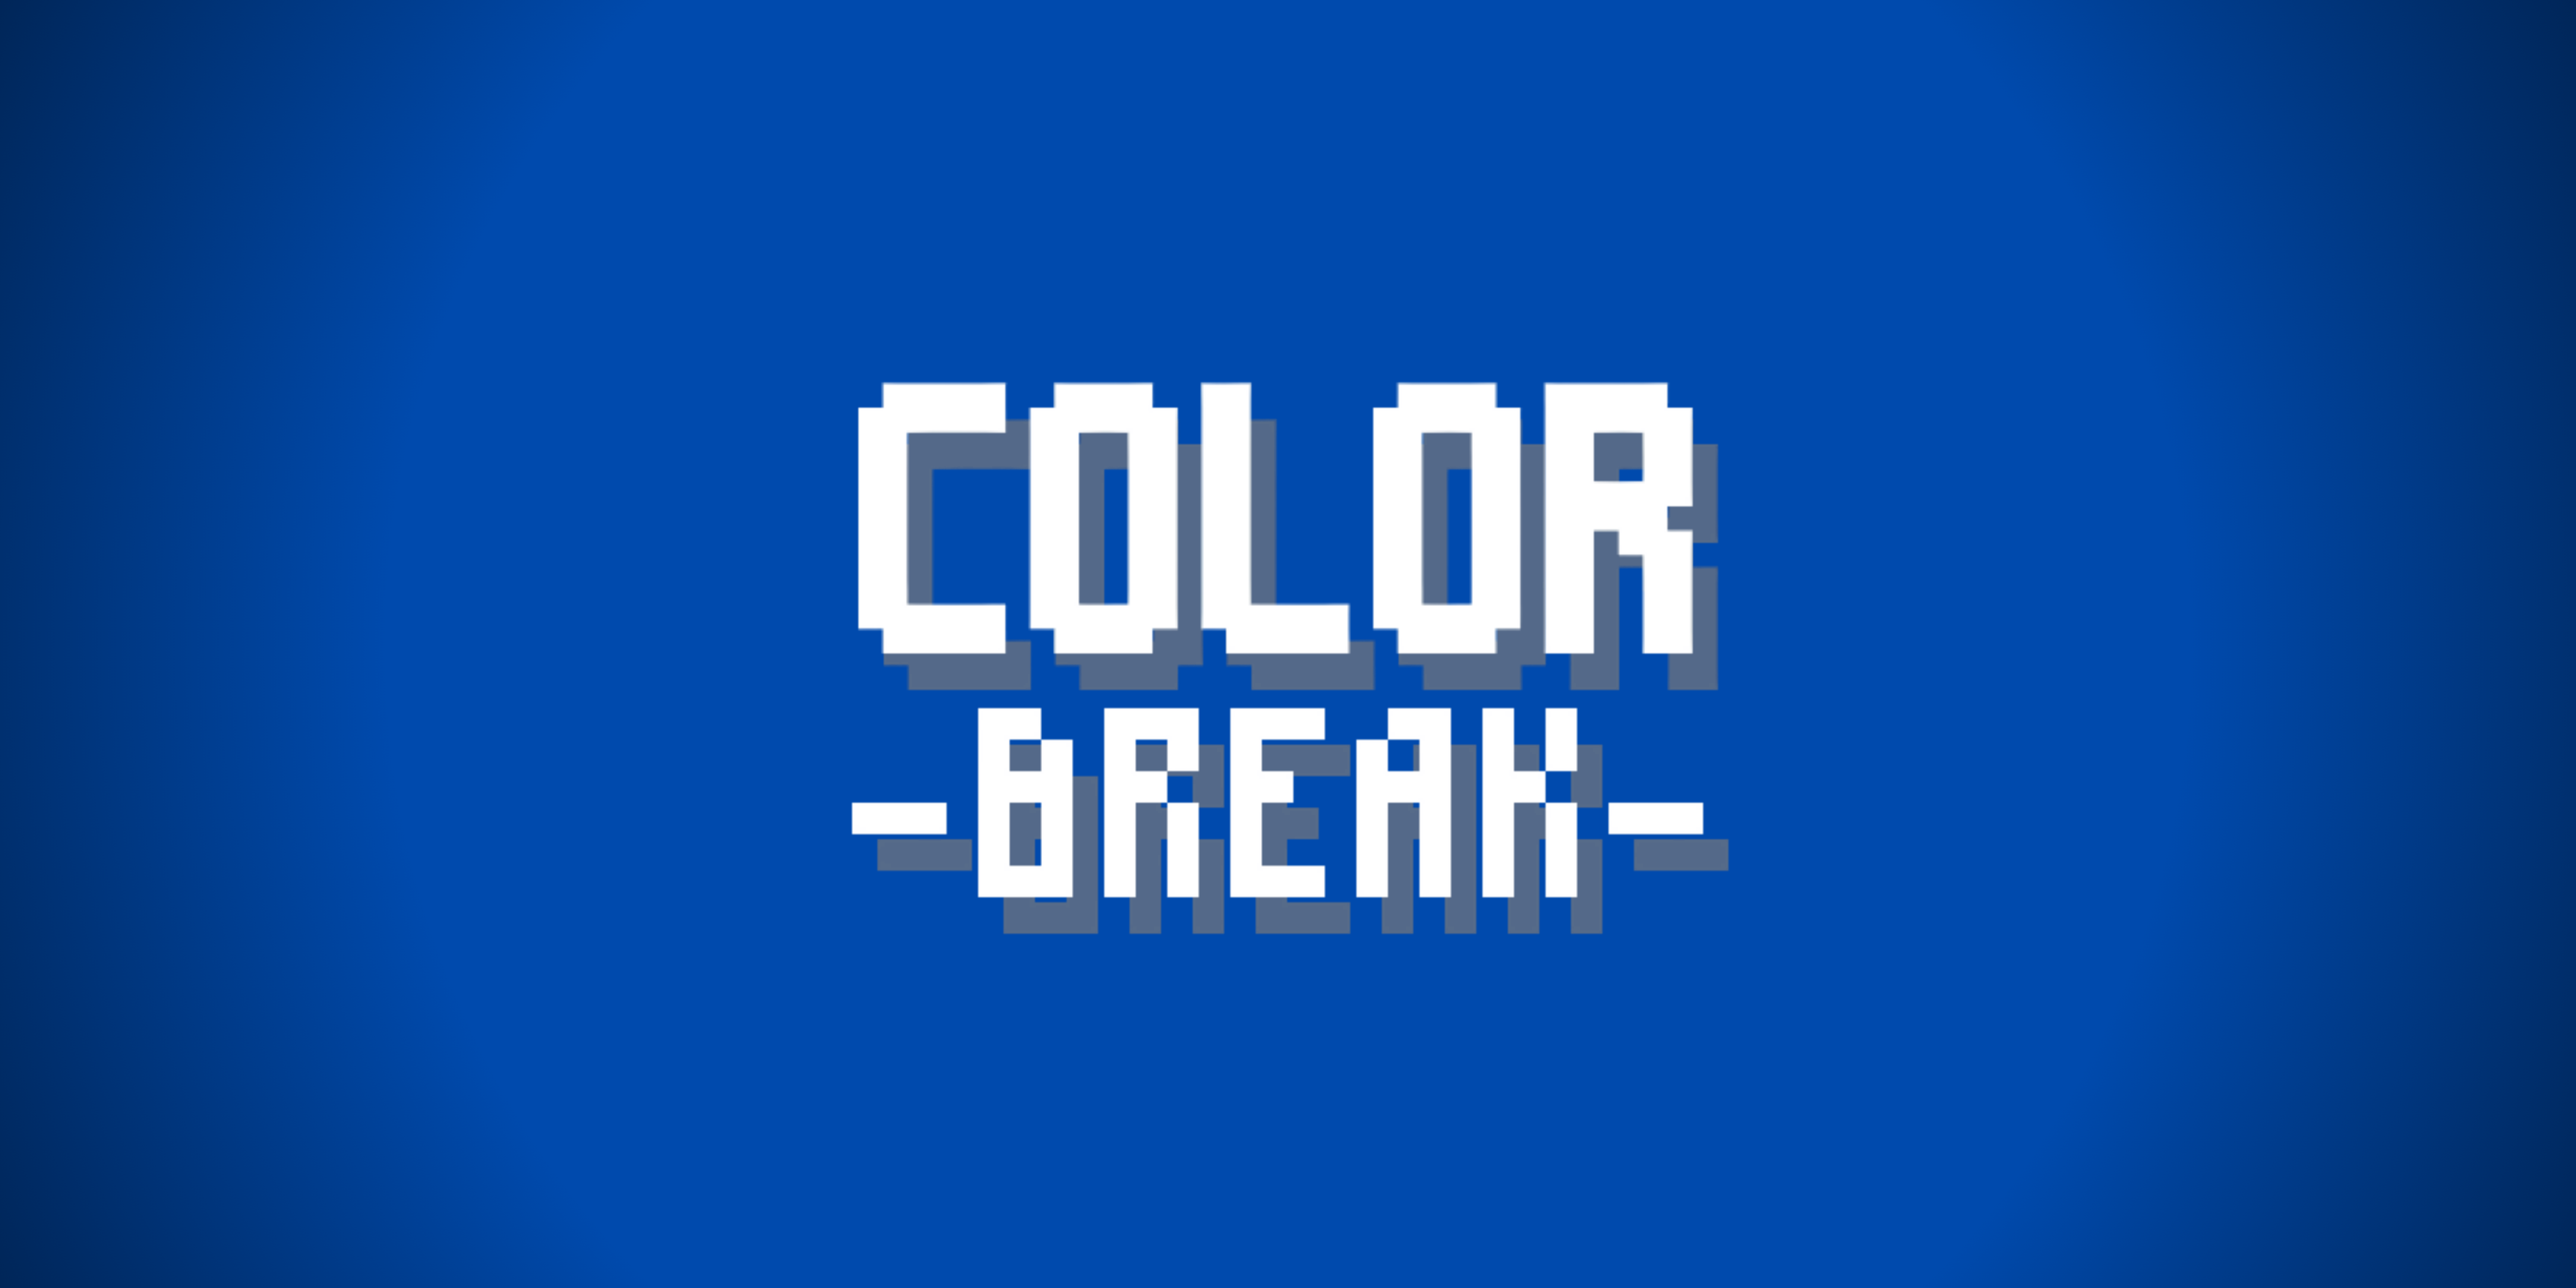 Color Break